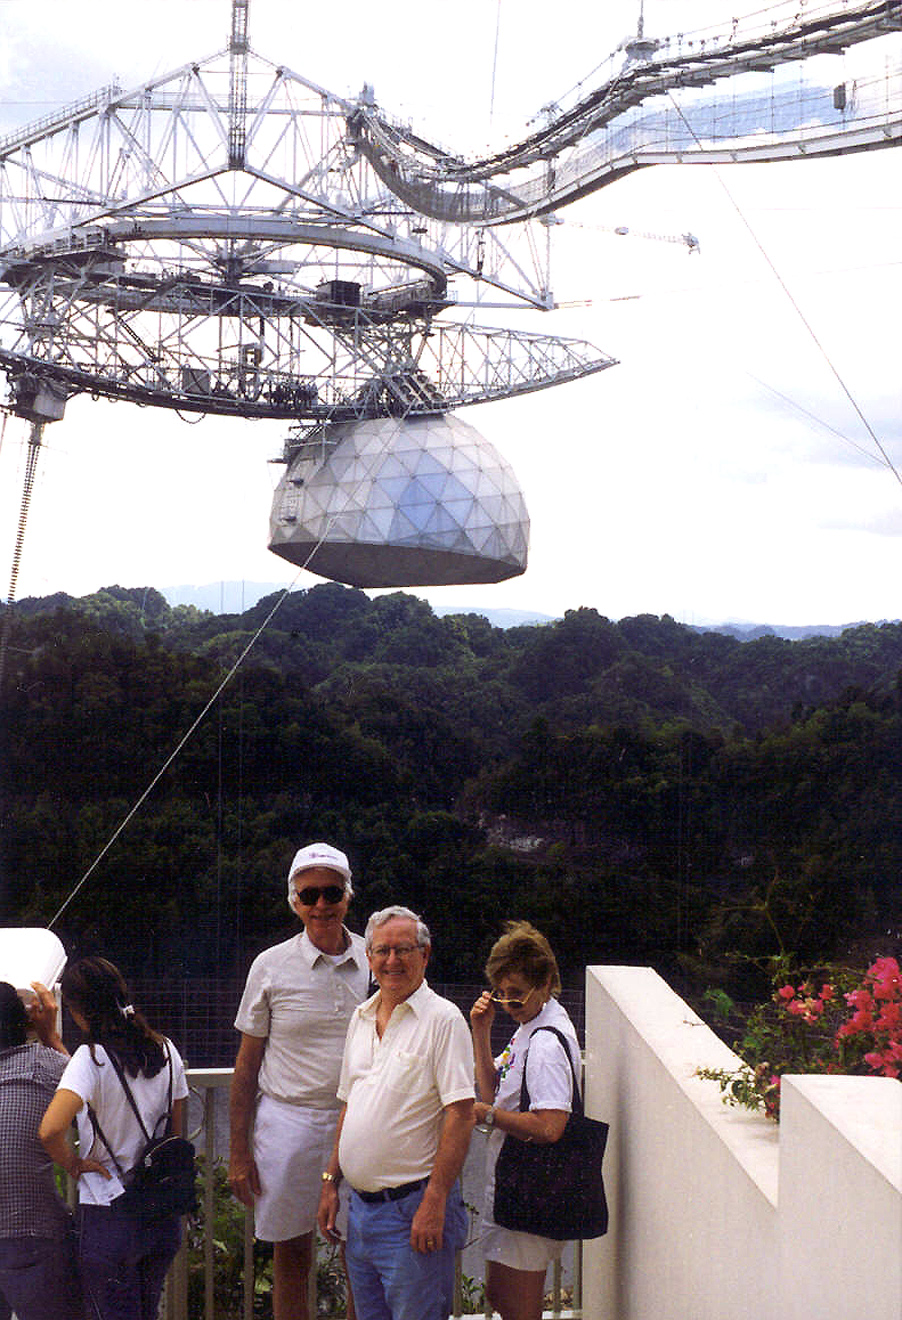 Eclipse 1998 - A26 - Aricebo Radio Telescope